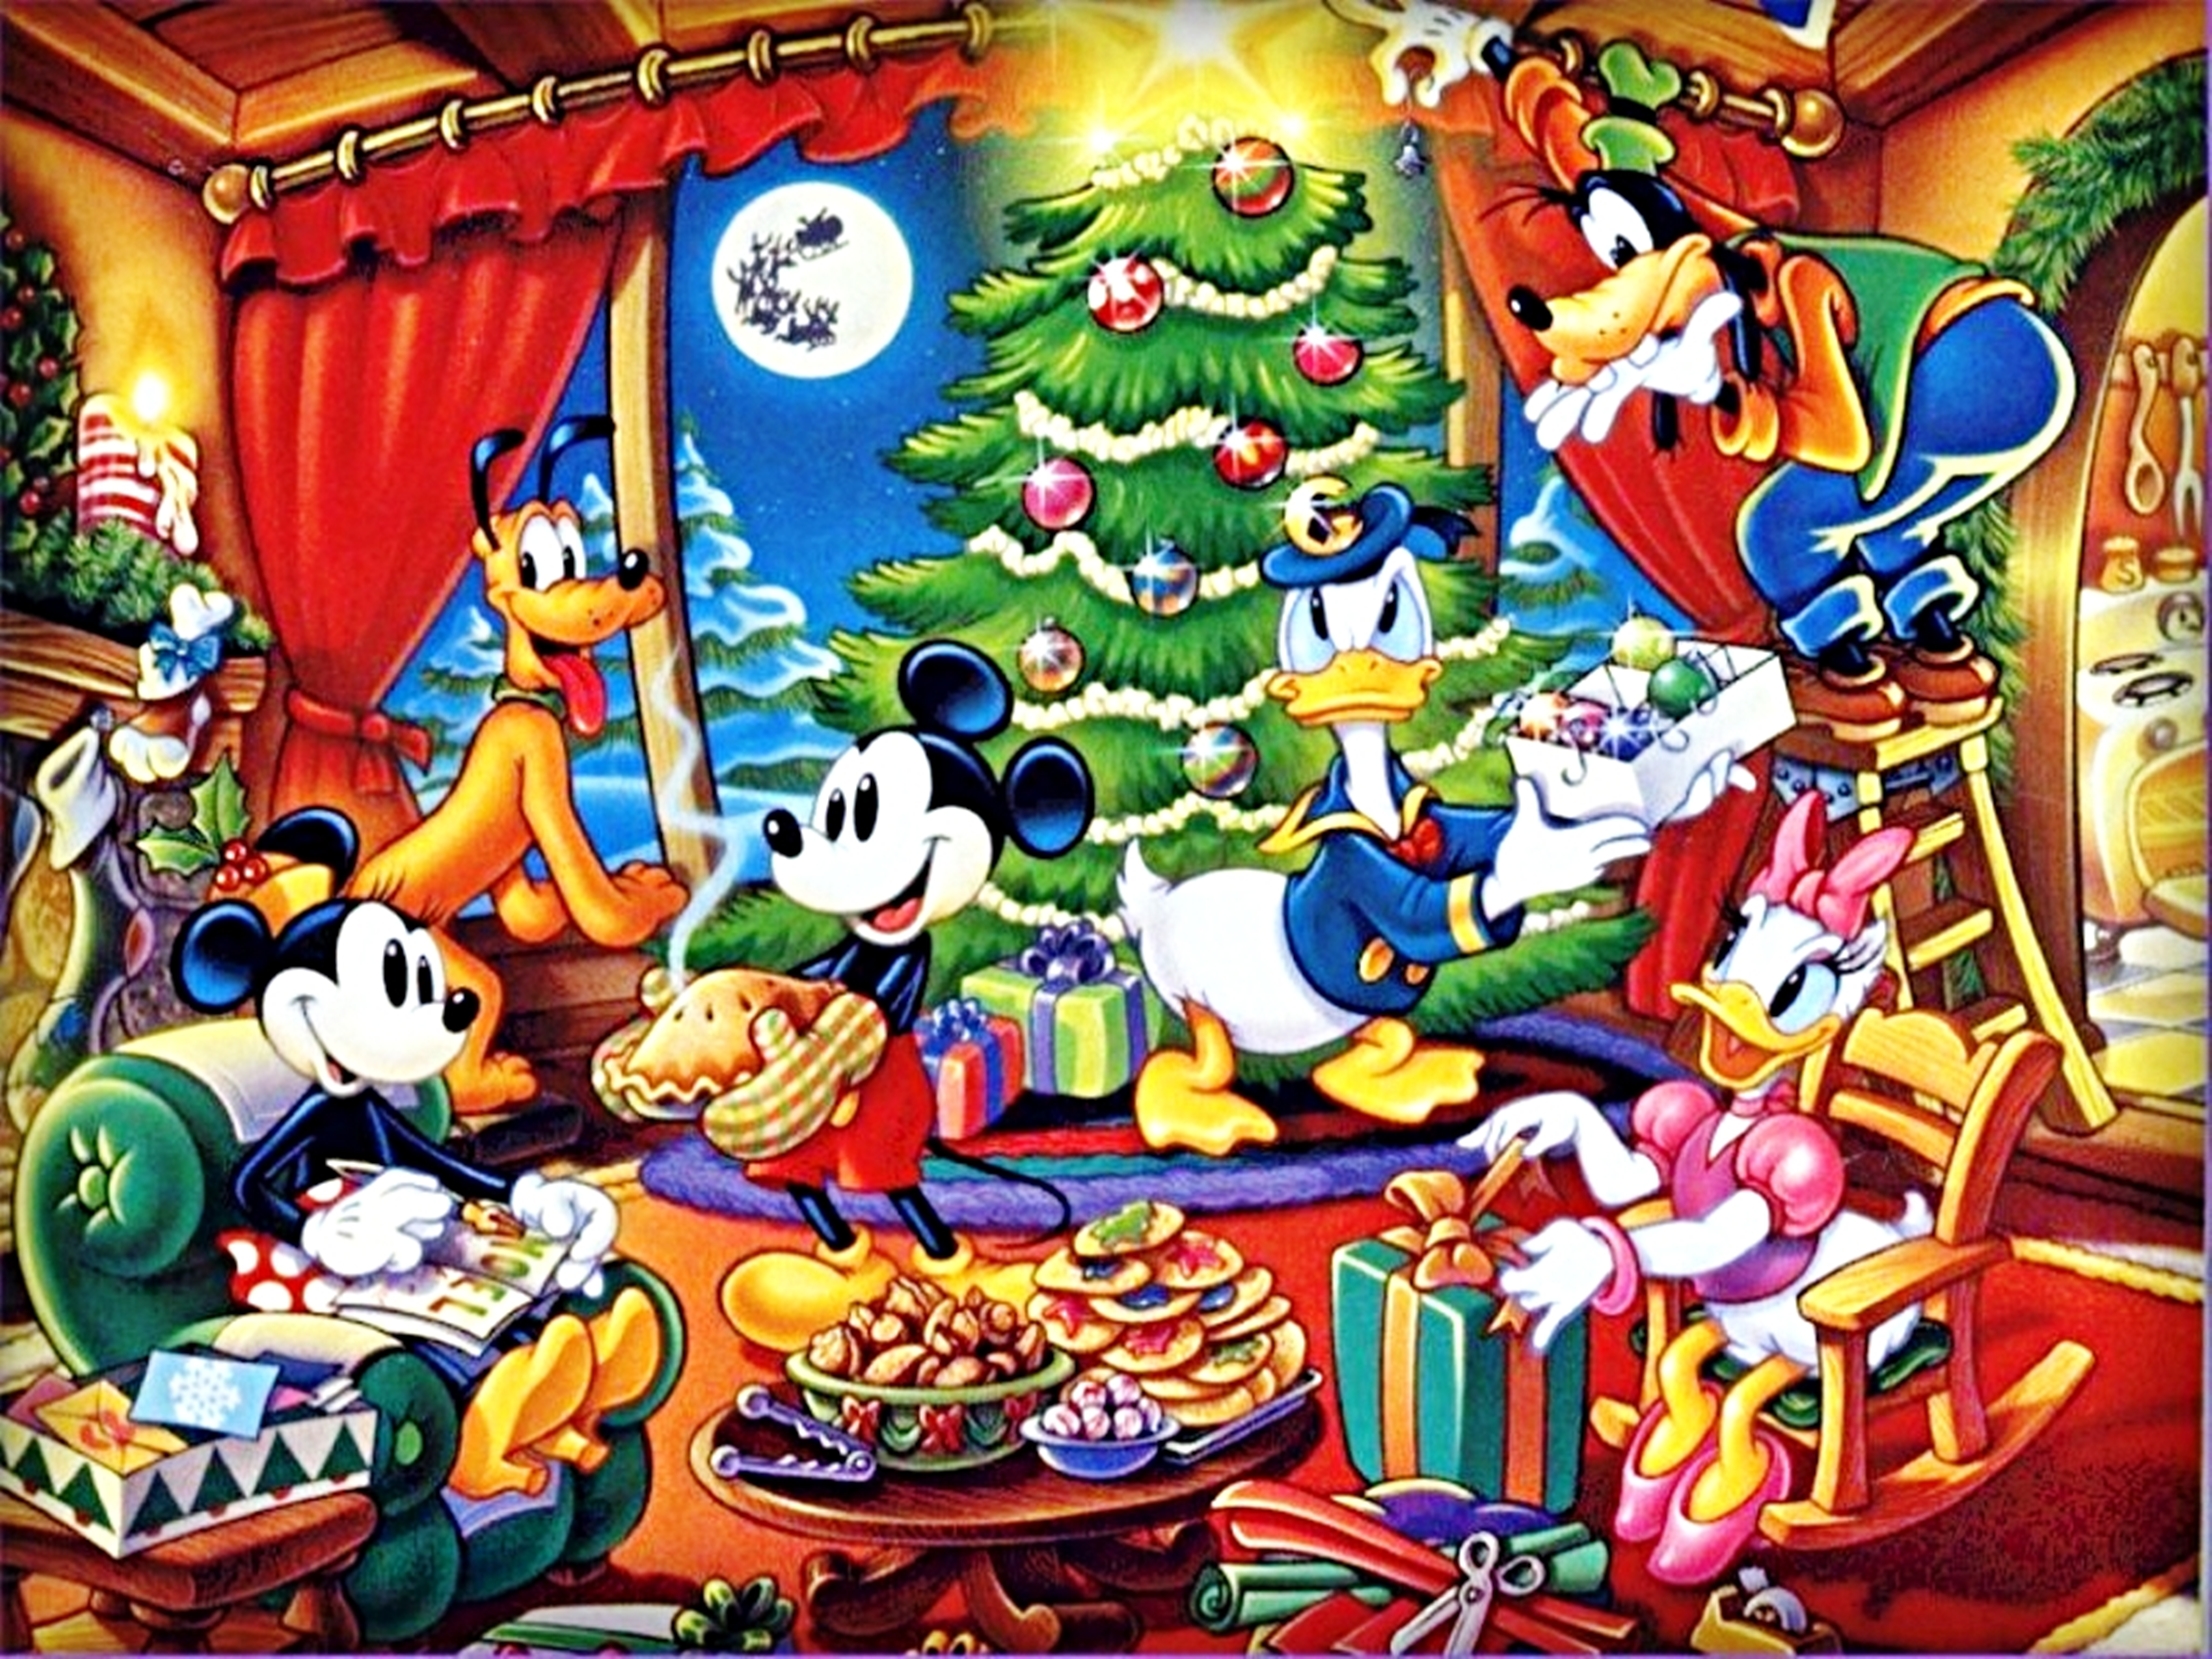  Disney Wallpapers The Disney Gang Christmas walt disney characters